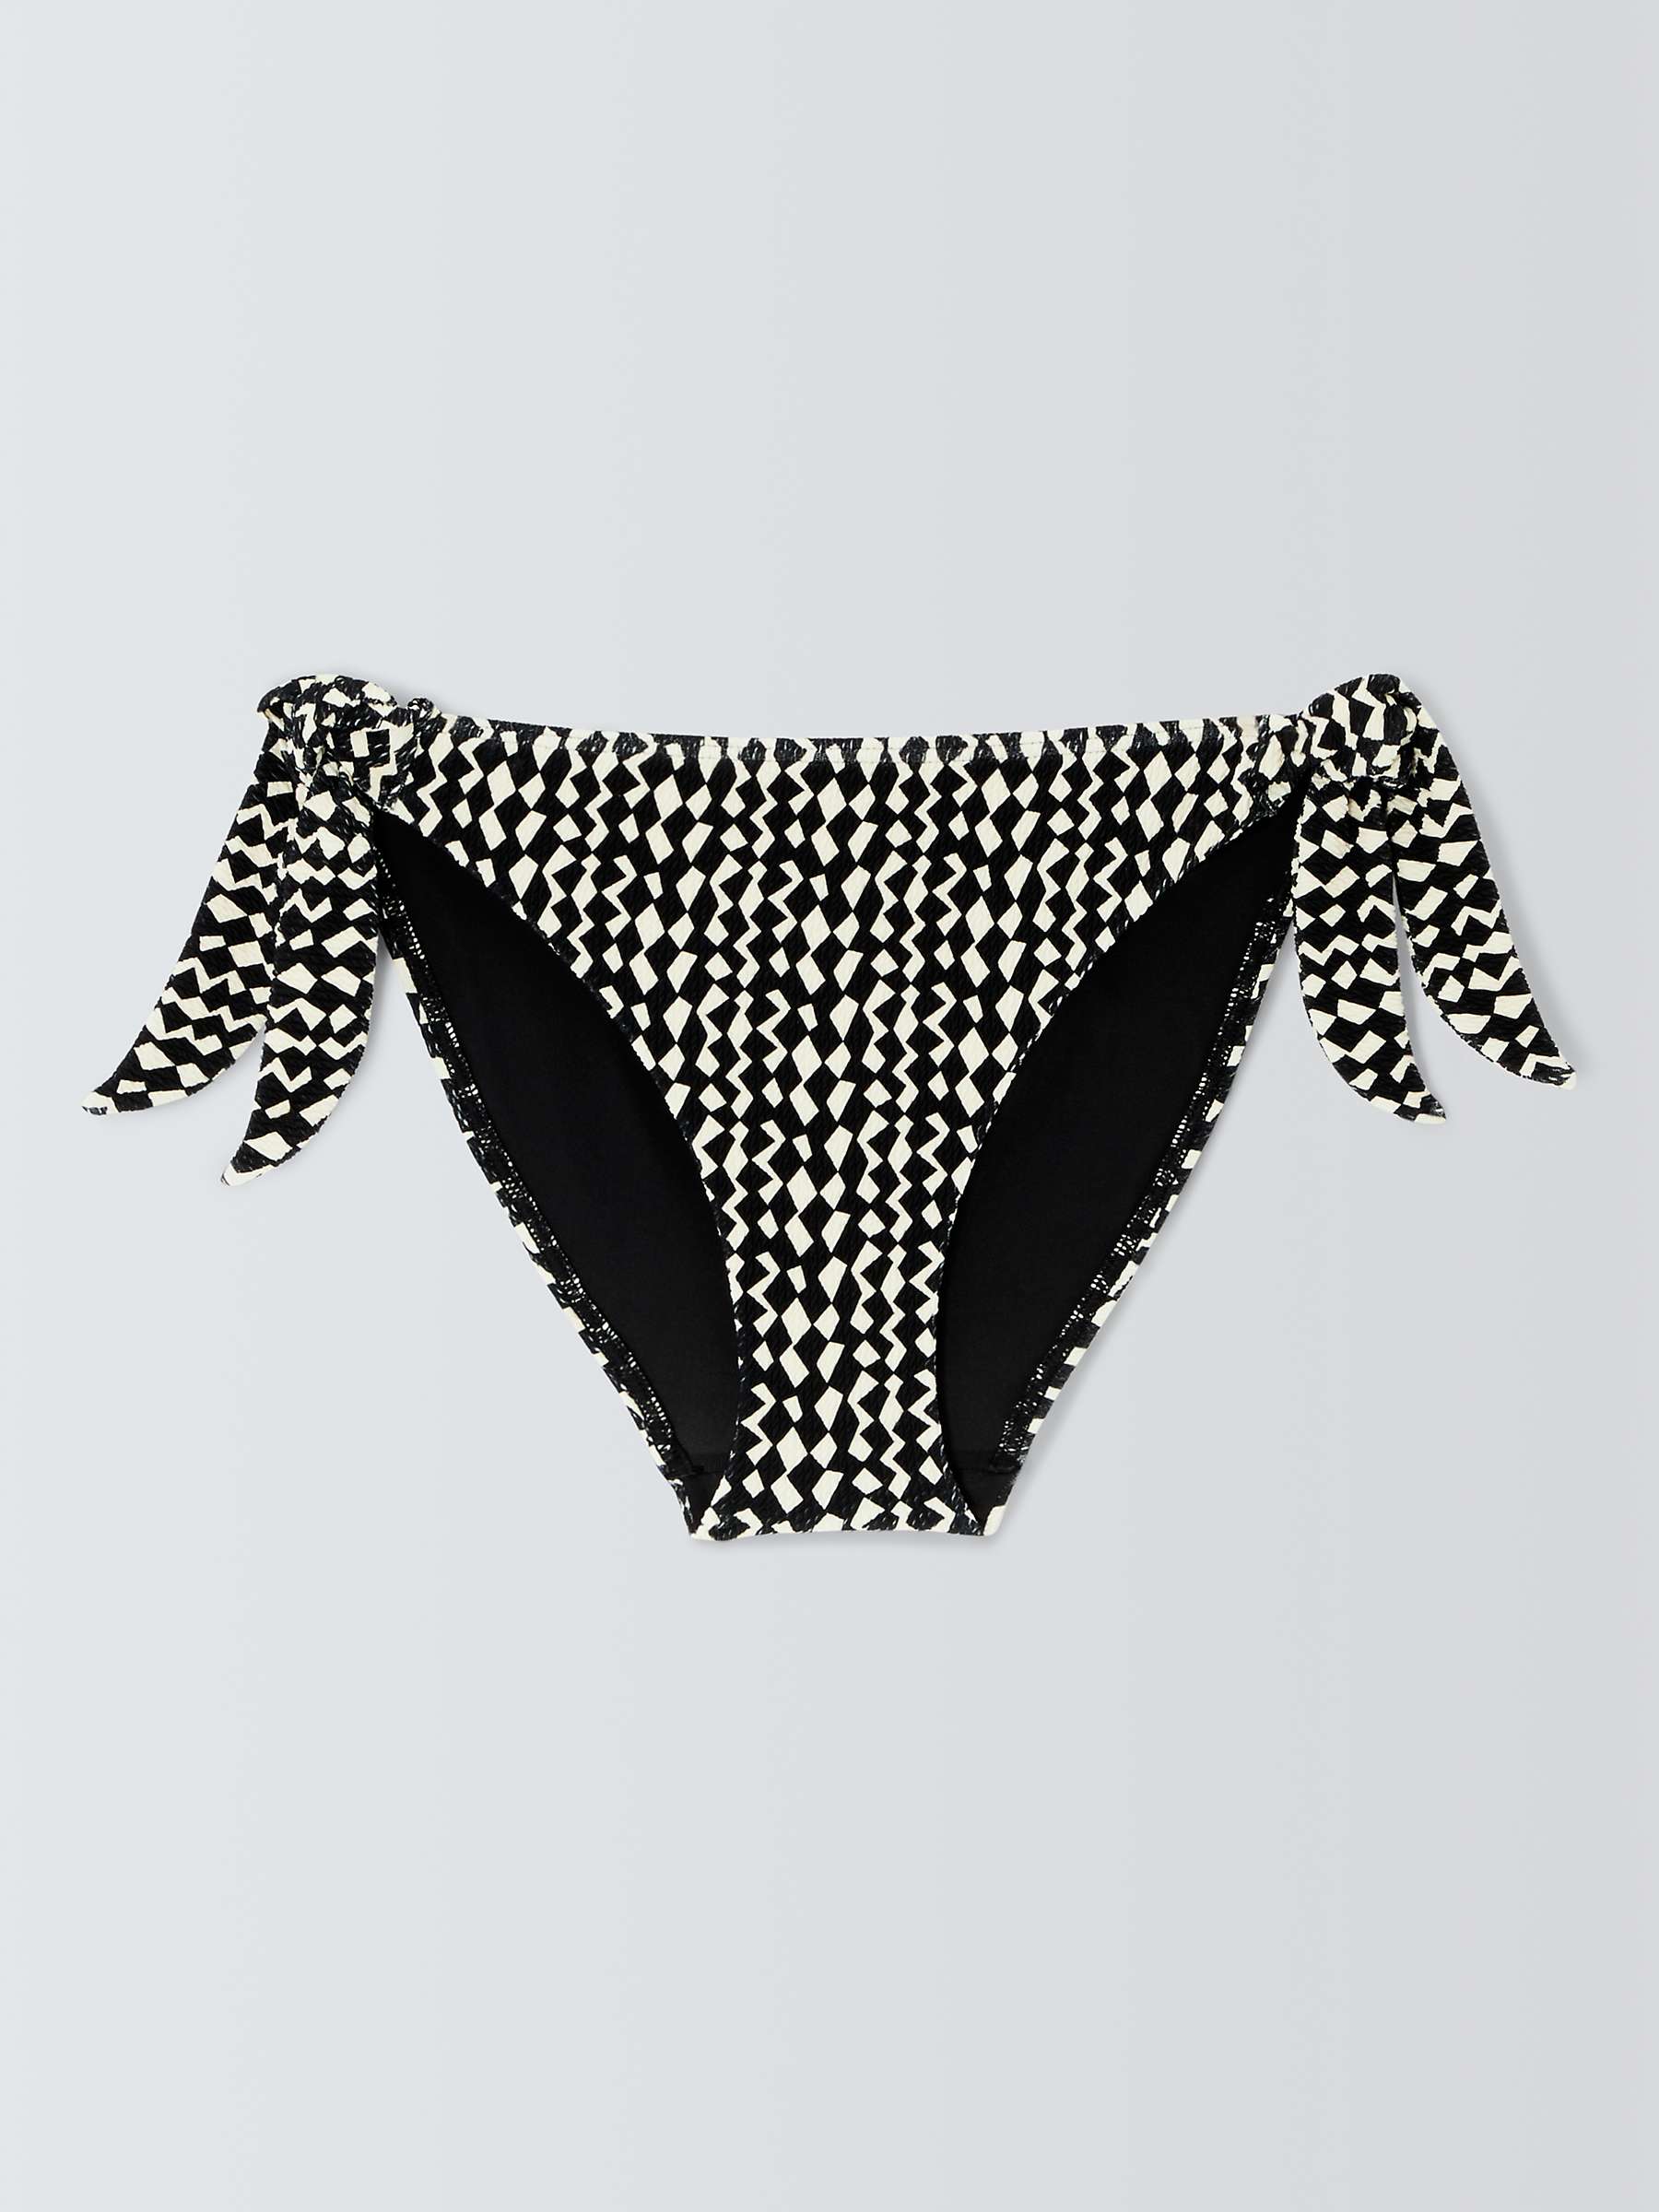 Buy John Lewis Geometric Side Tie Bikini Bottoms Online at johnlewis.com